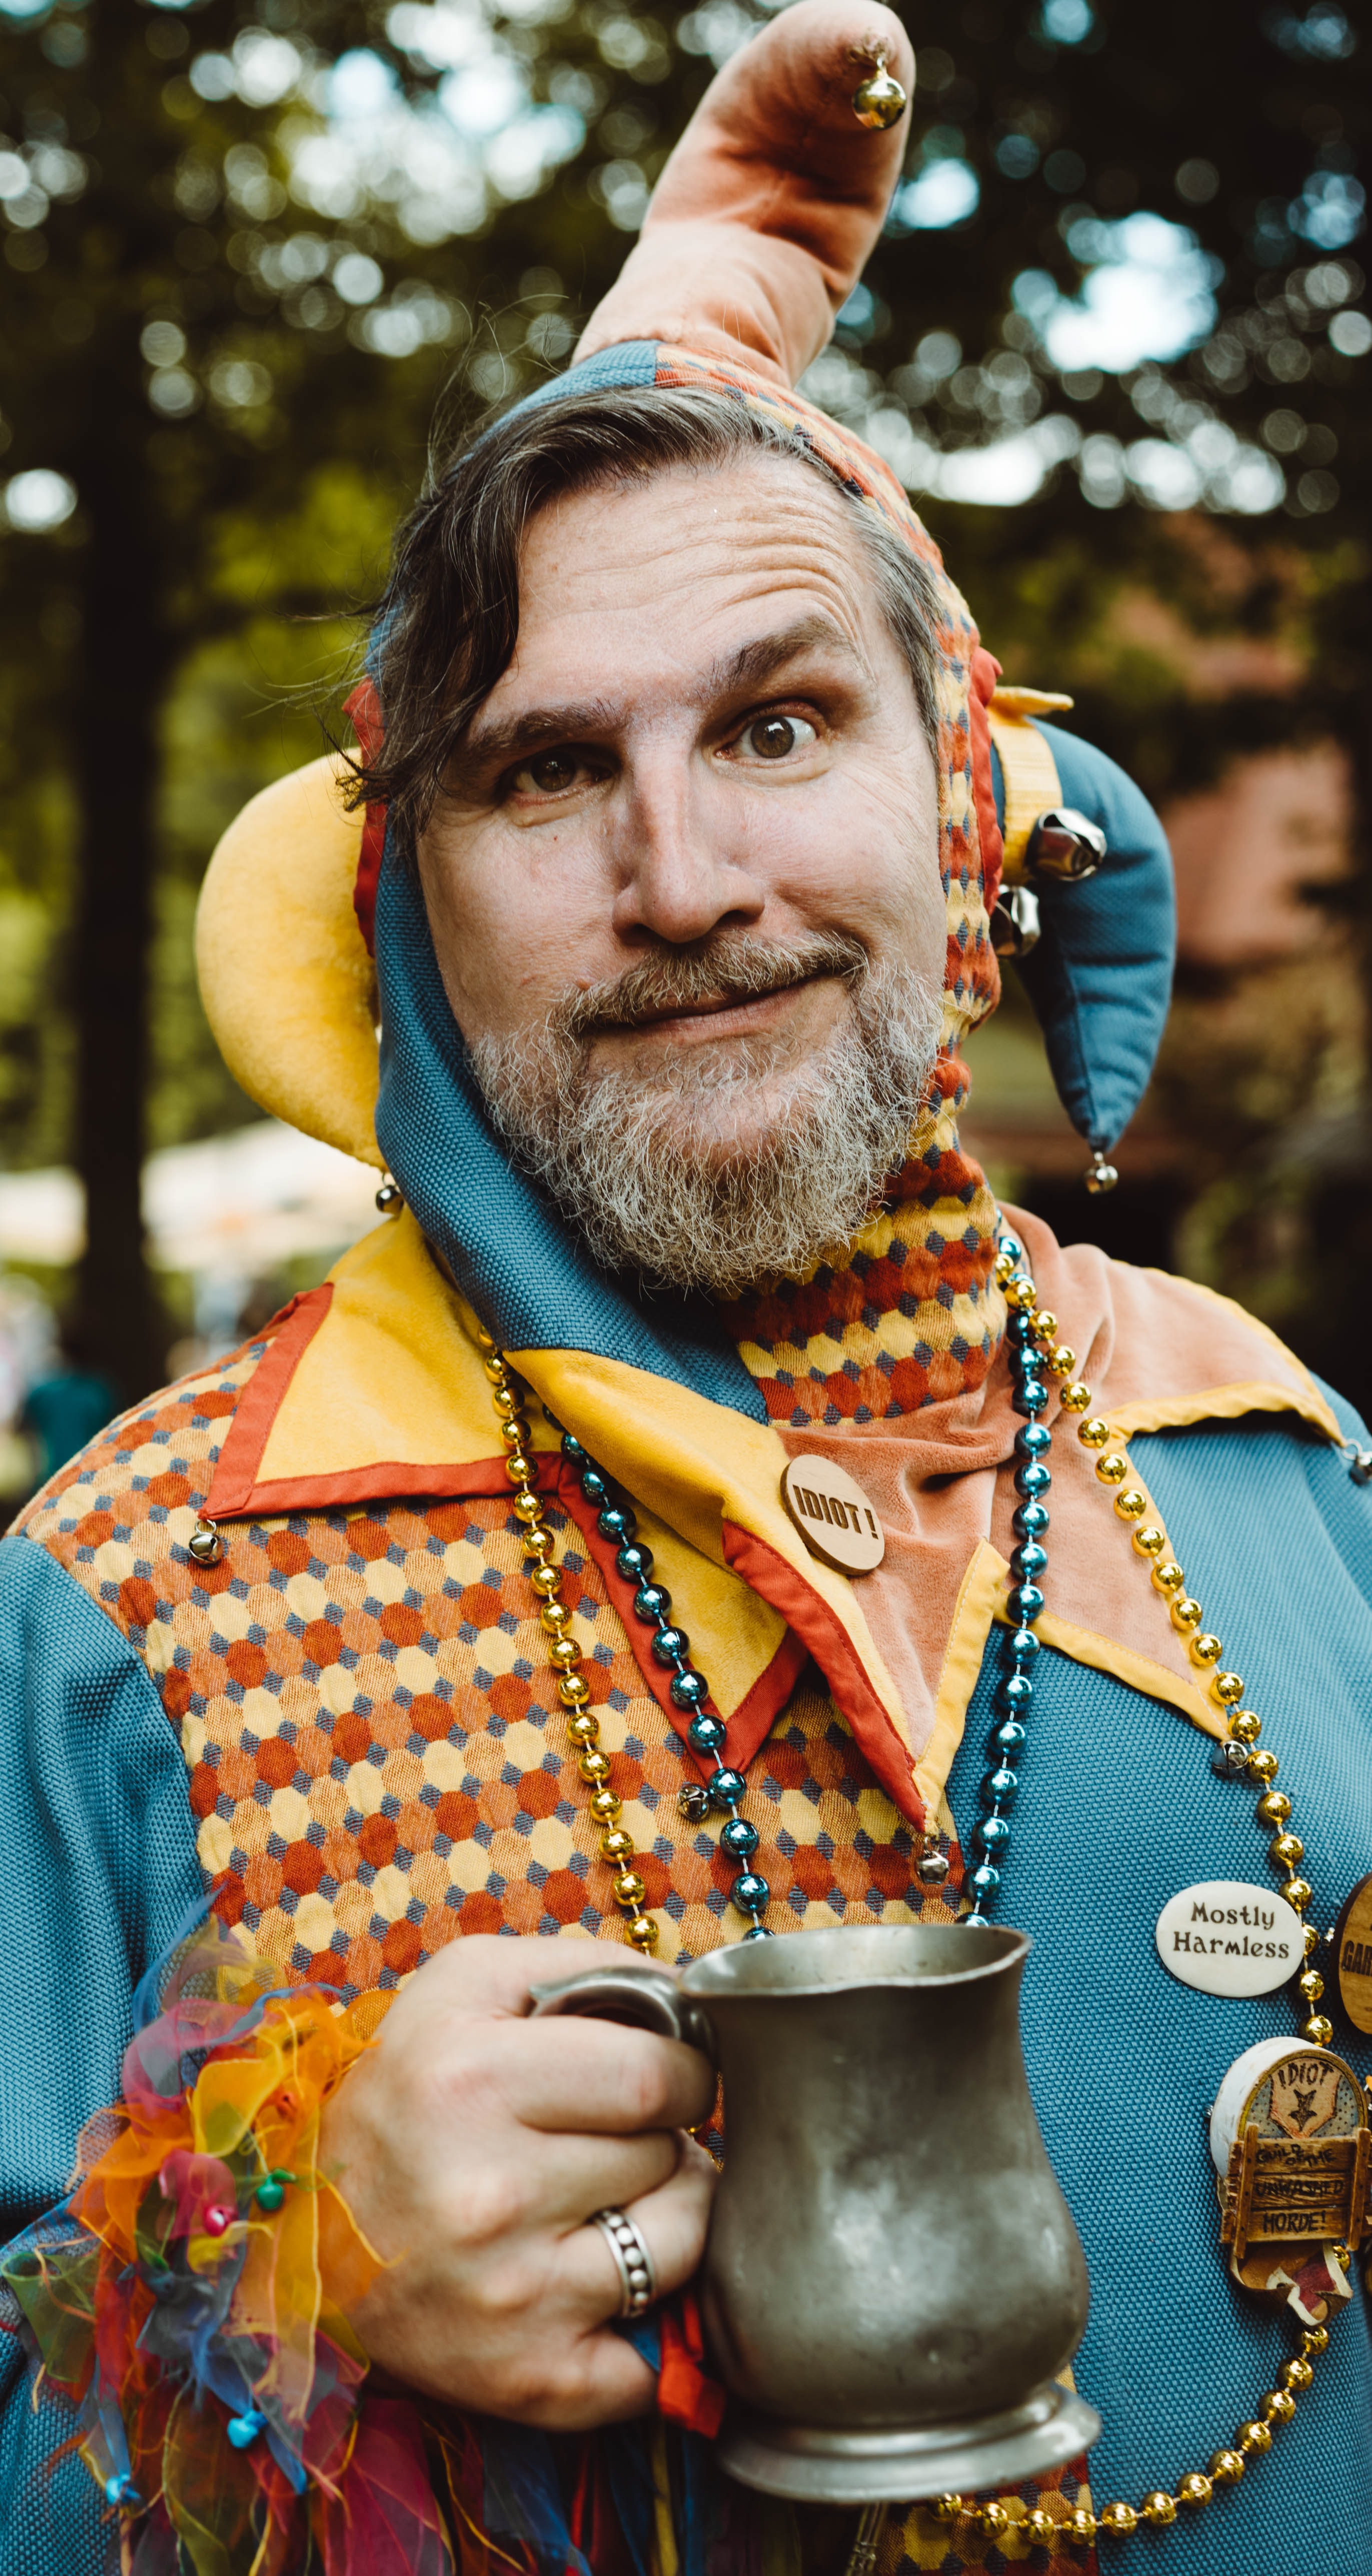 Man in jester costume; image by Austin Lowman, via Unsplash.com.